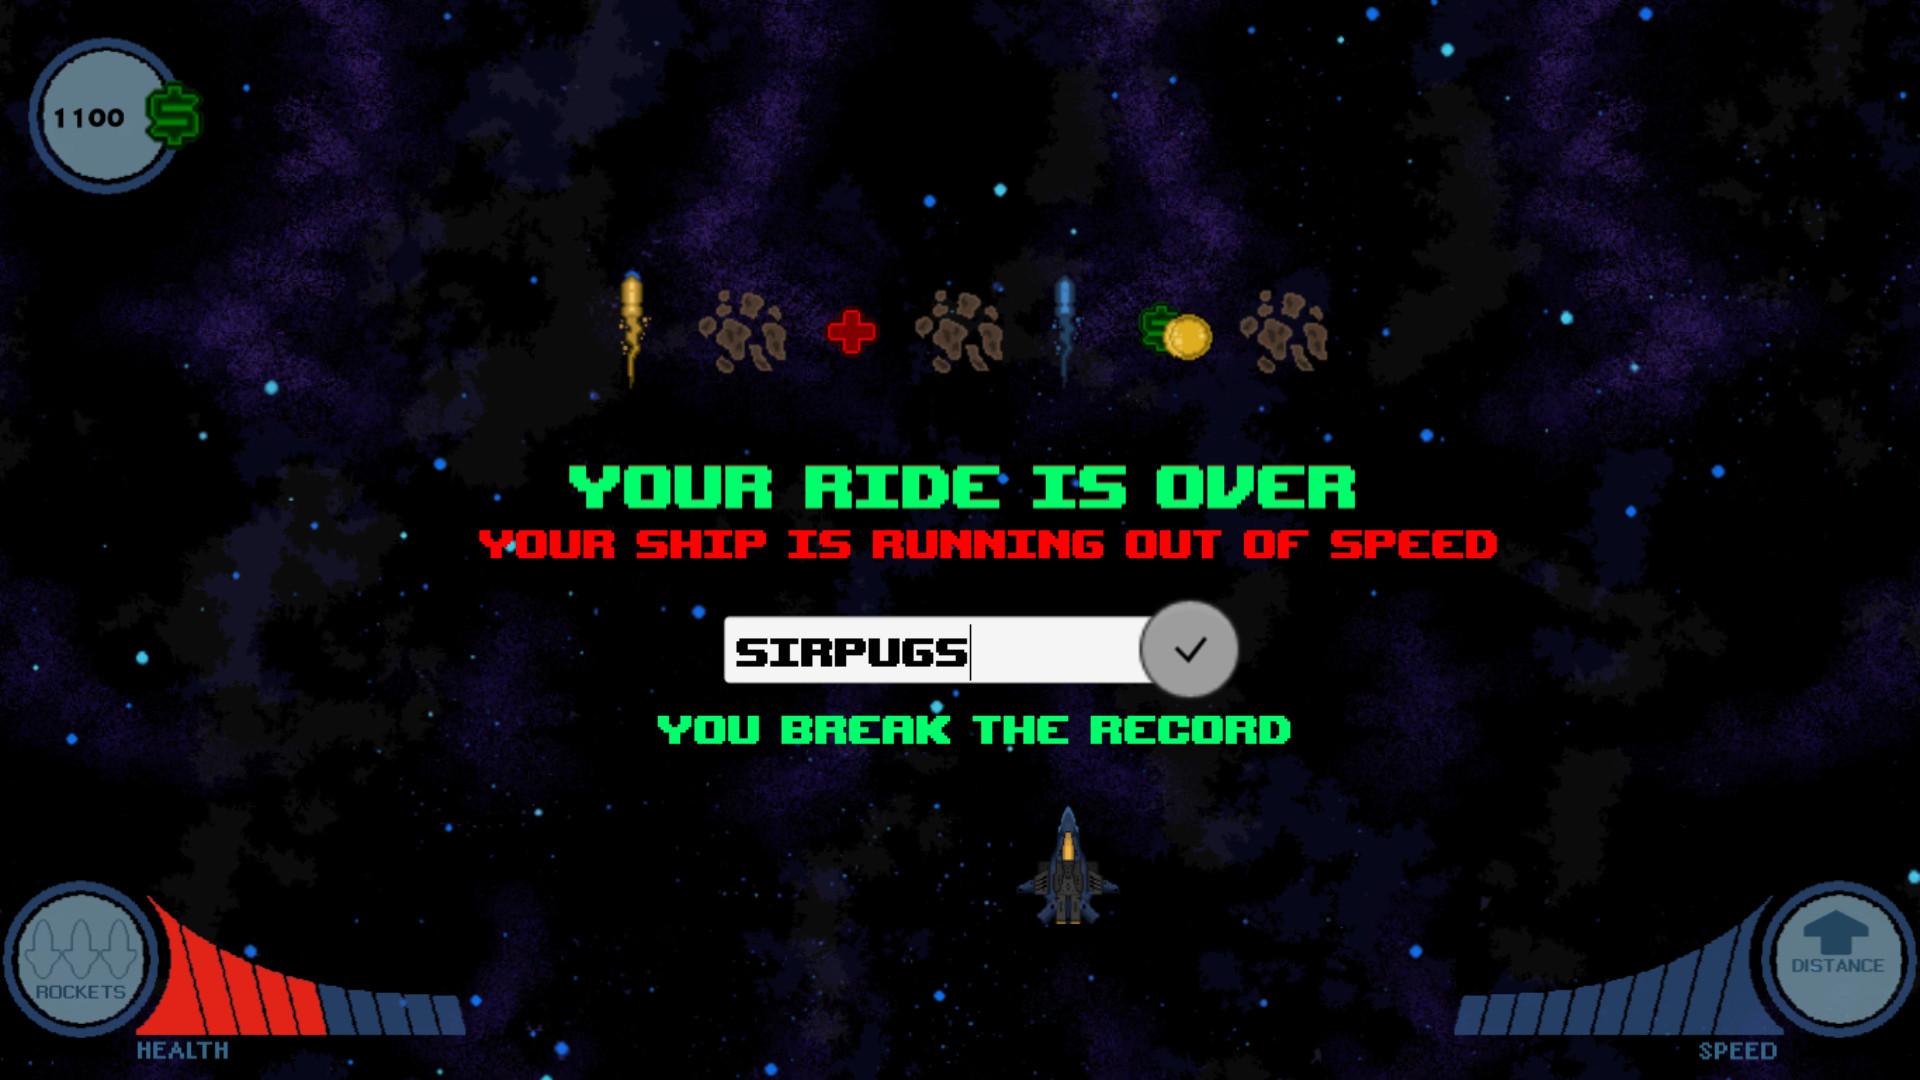 Screenshot №4 from game $1 Ride